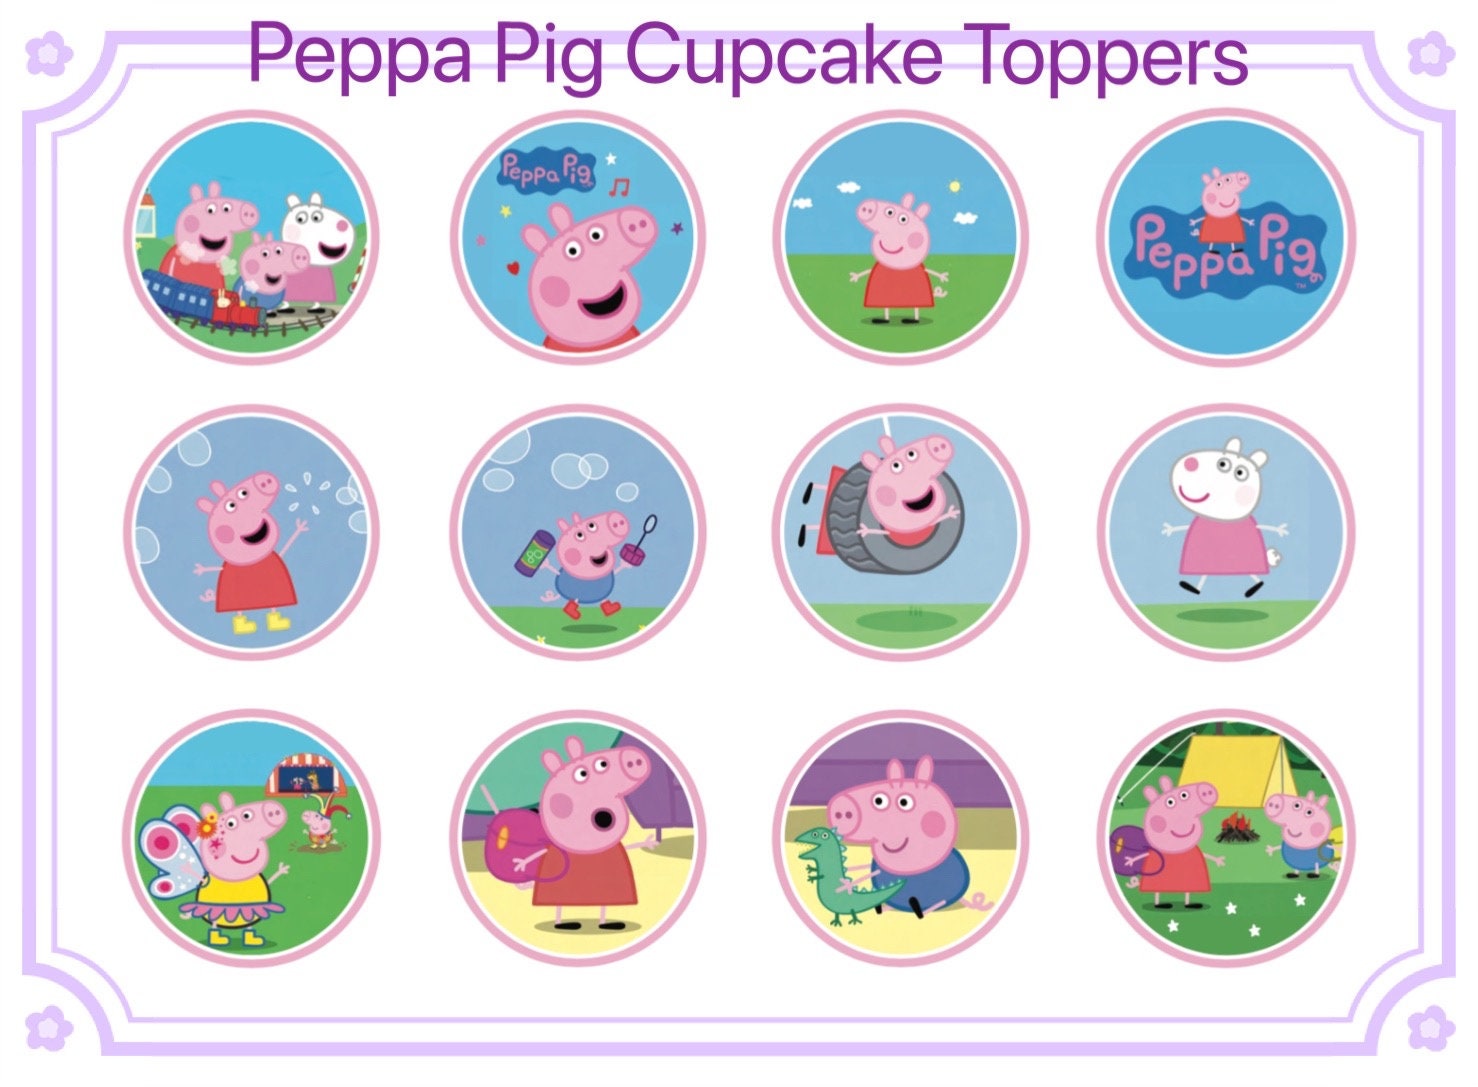 Peppa Pig Stickers 